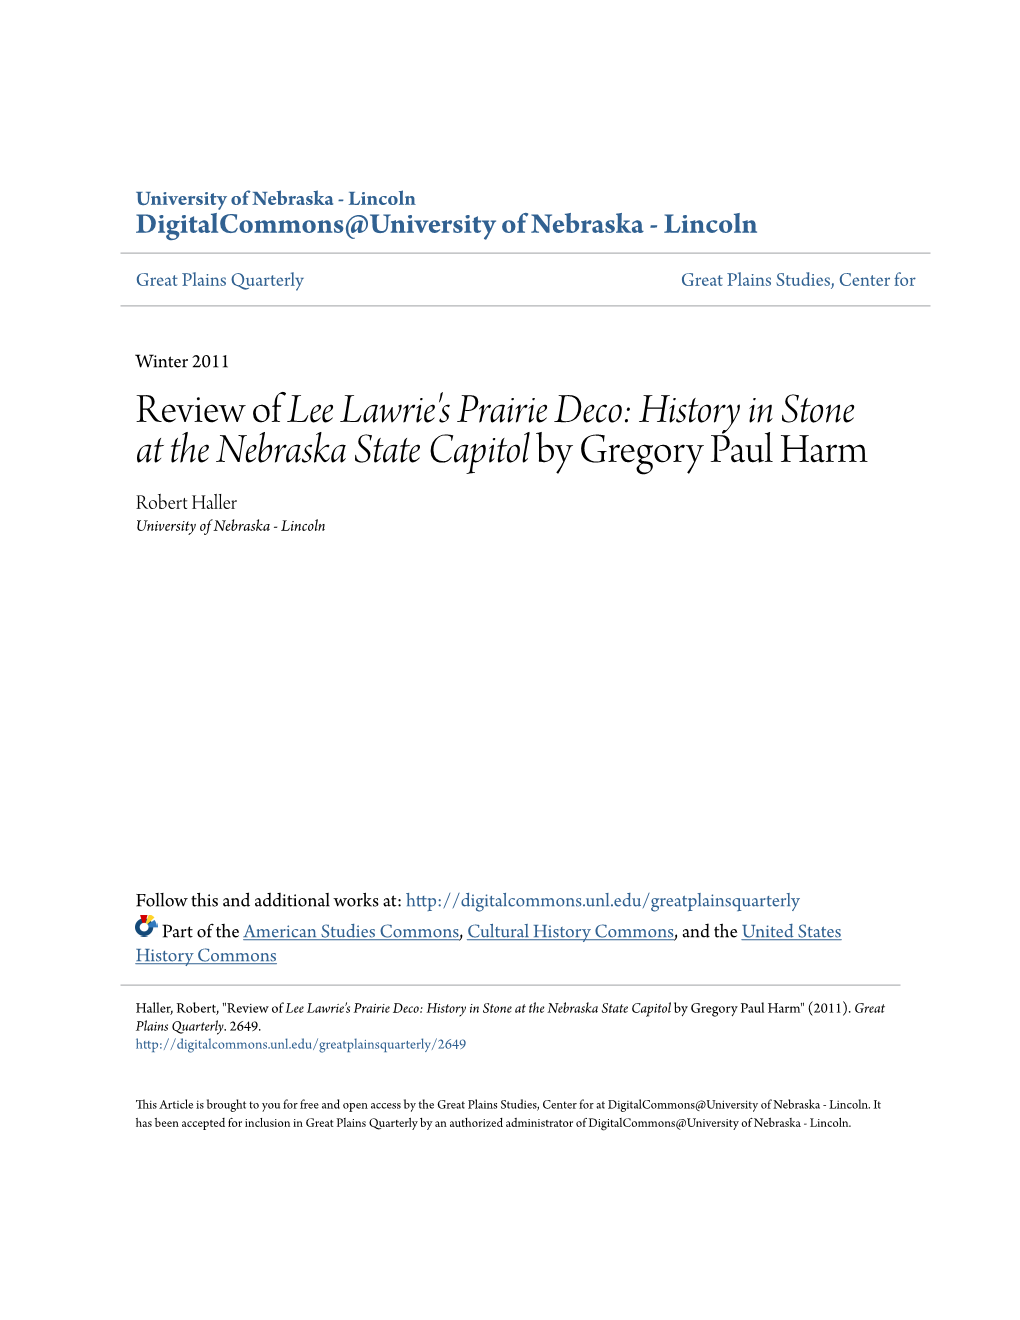 Review of Lee Lawrie's Prairie Deco: History in Stone at the Nebraska State Capitol by Gregory Paul Harm Robert Haller University of Nebraska - Lincoln